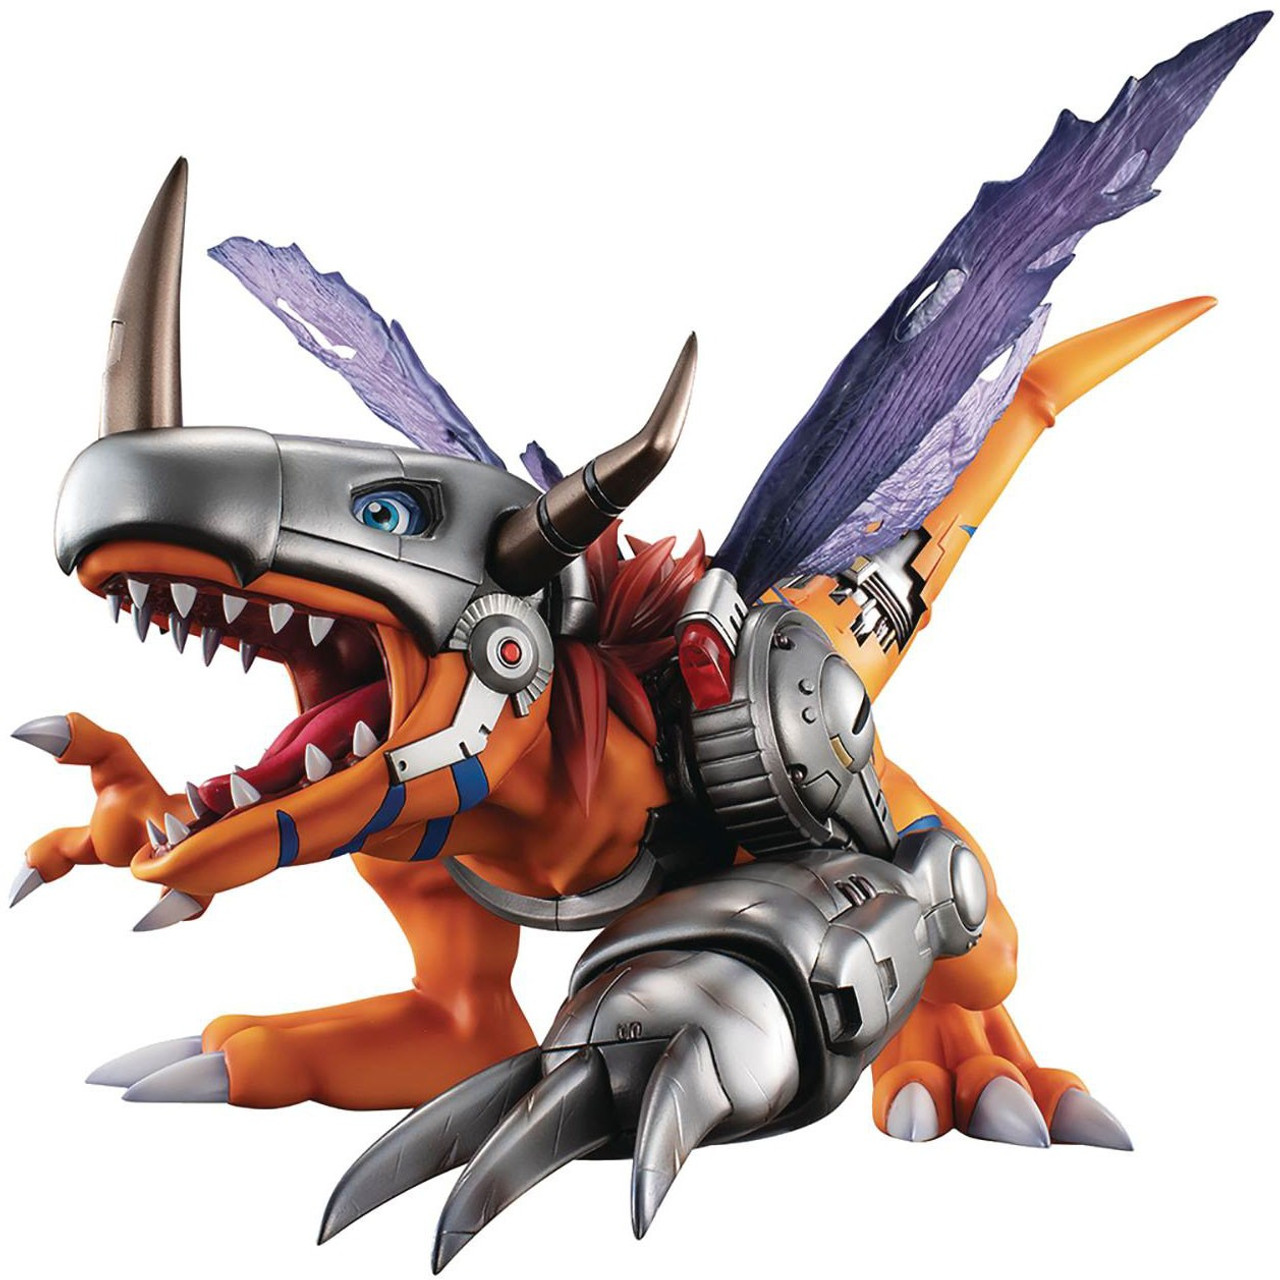 New Digimon Adventure Greymon and Taichi 12/" PVC Collectible Anime Figure Toy